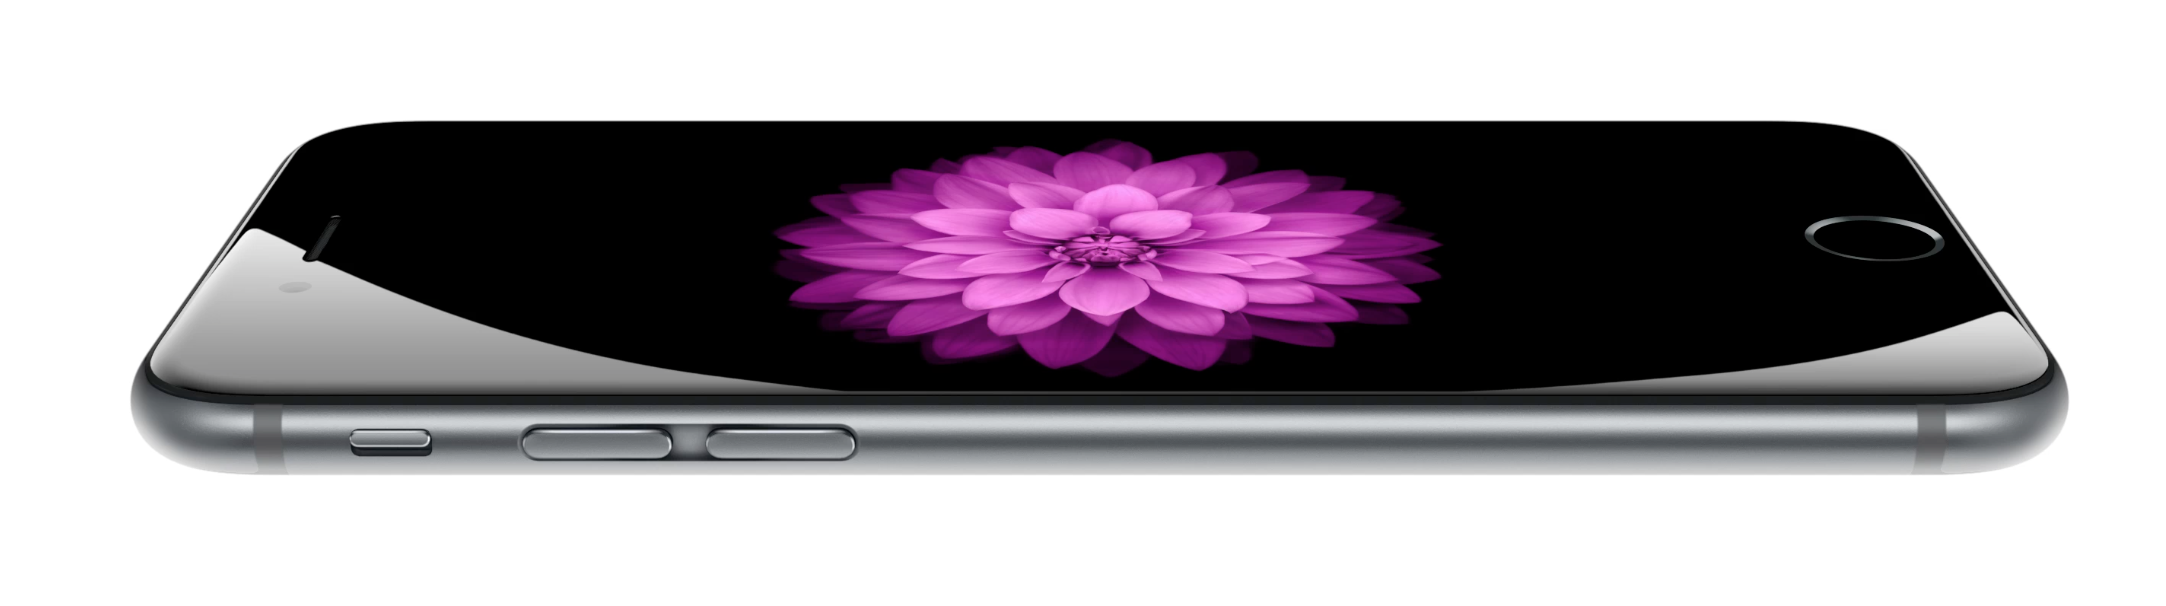 iPhone 6s ve iPhone 6s Plus Modellerine Force Touch Desteği